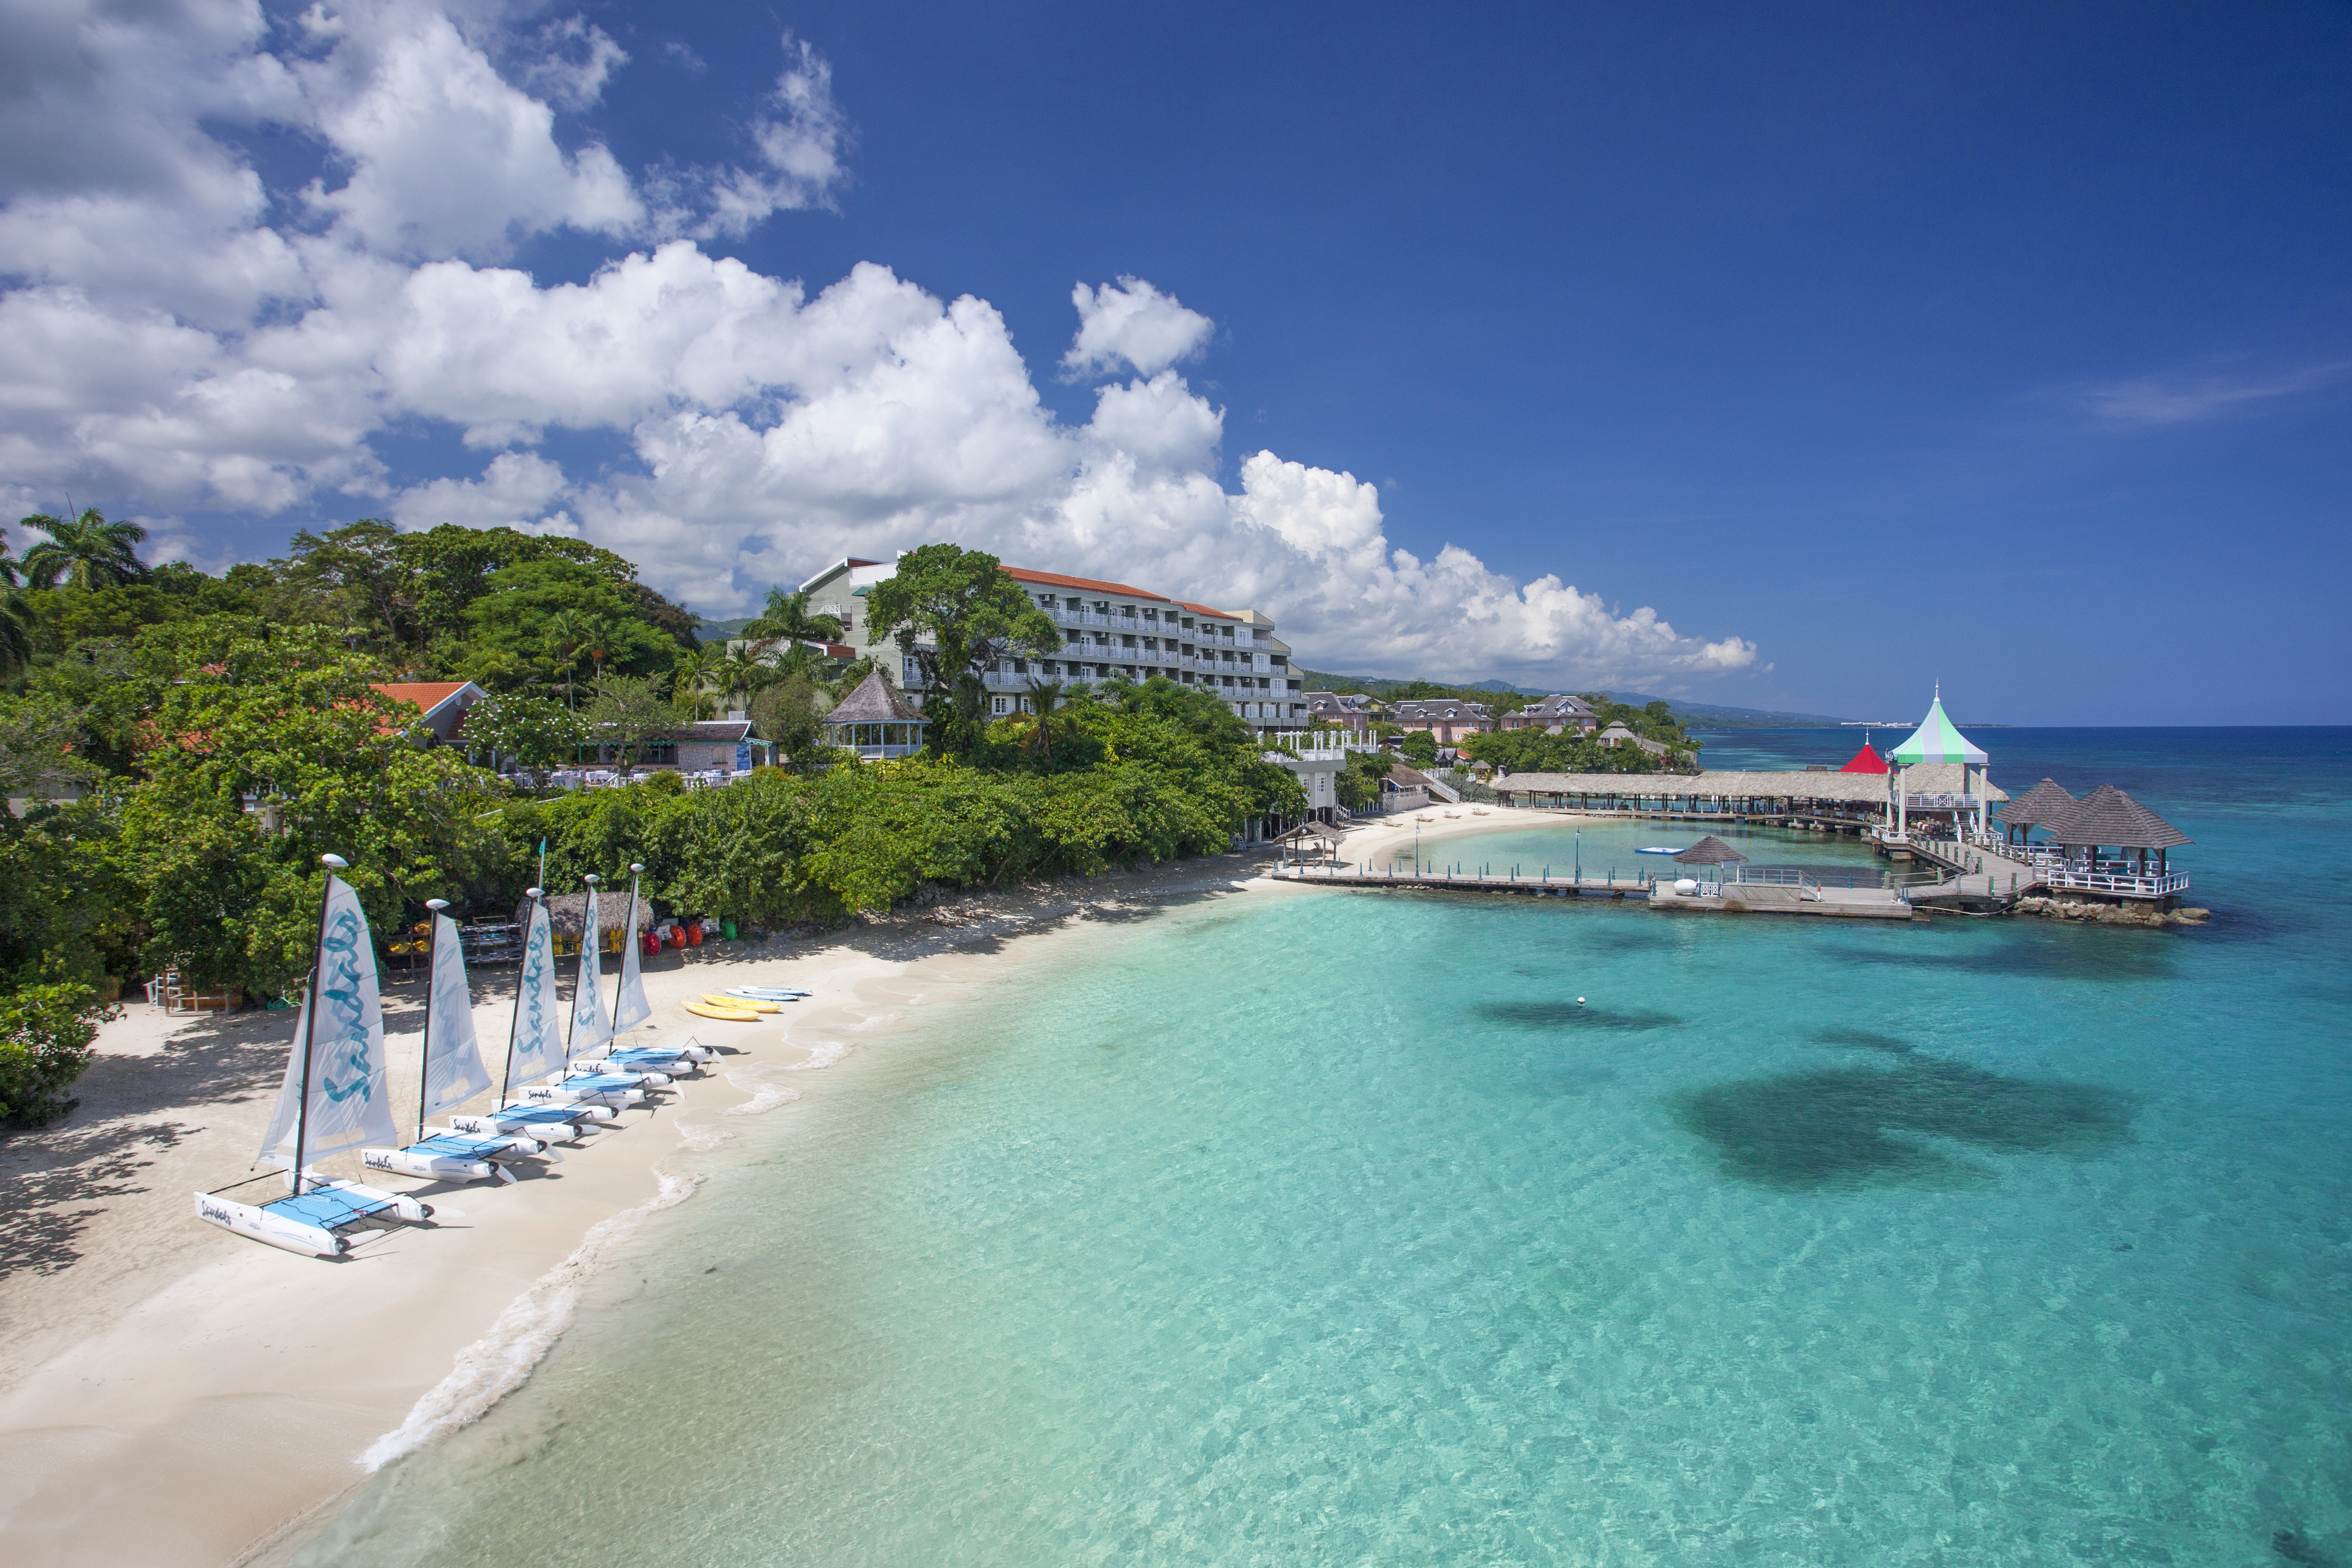 The Caribbean Riviera at Sandals Ochi Resort in Jamaica | Sandals